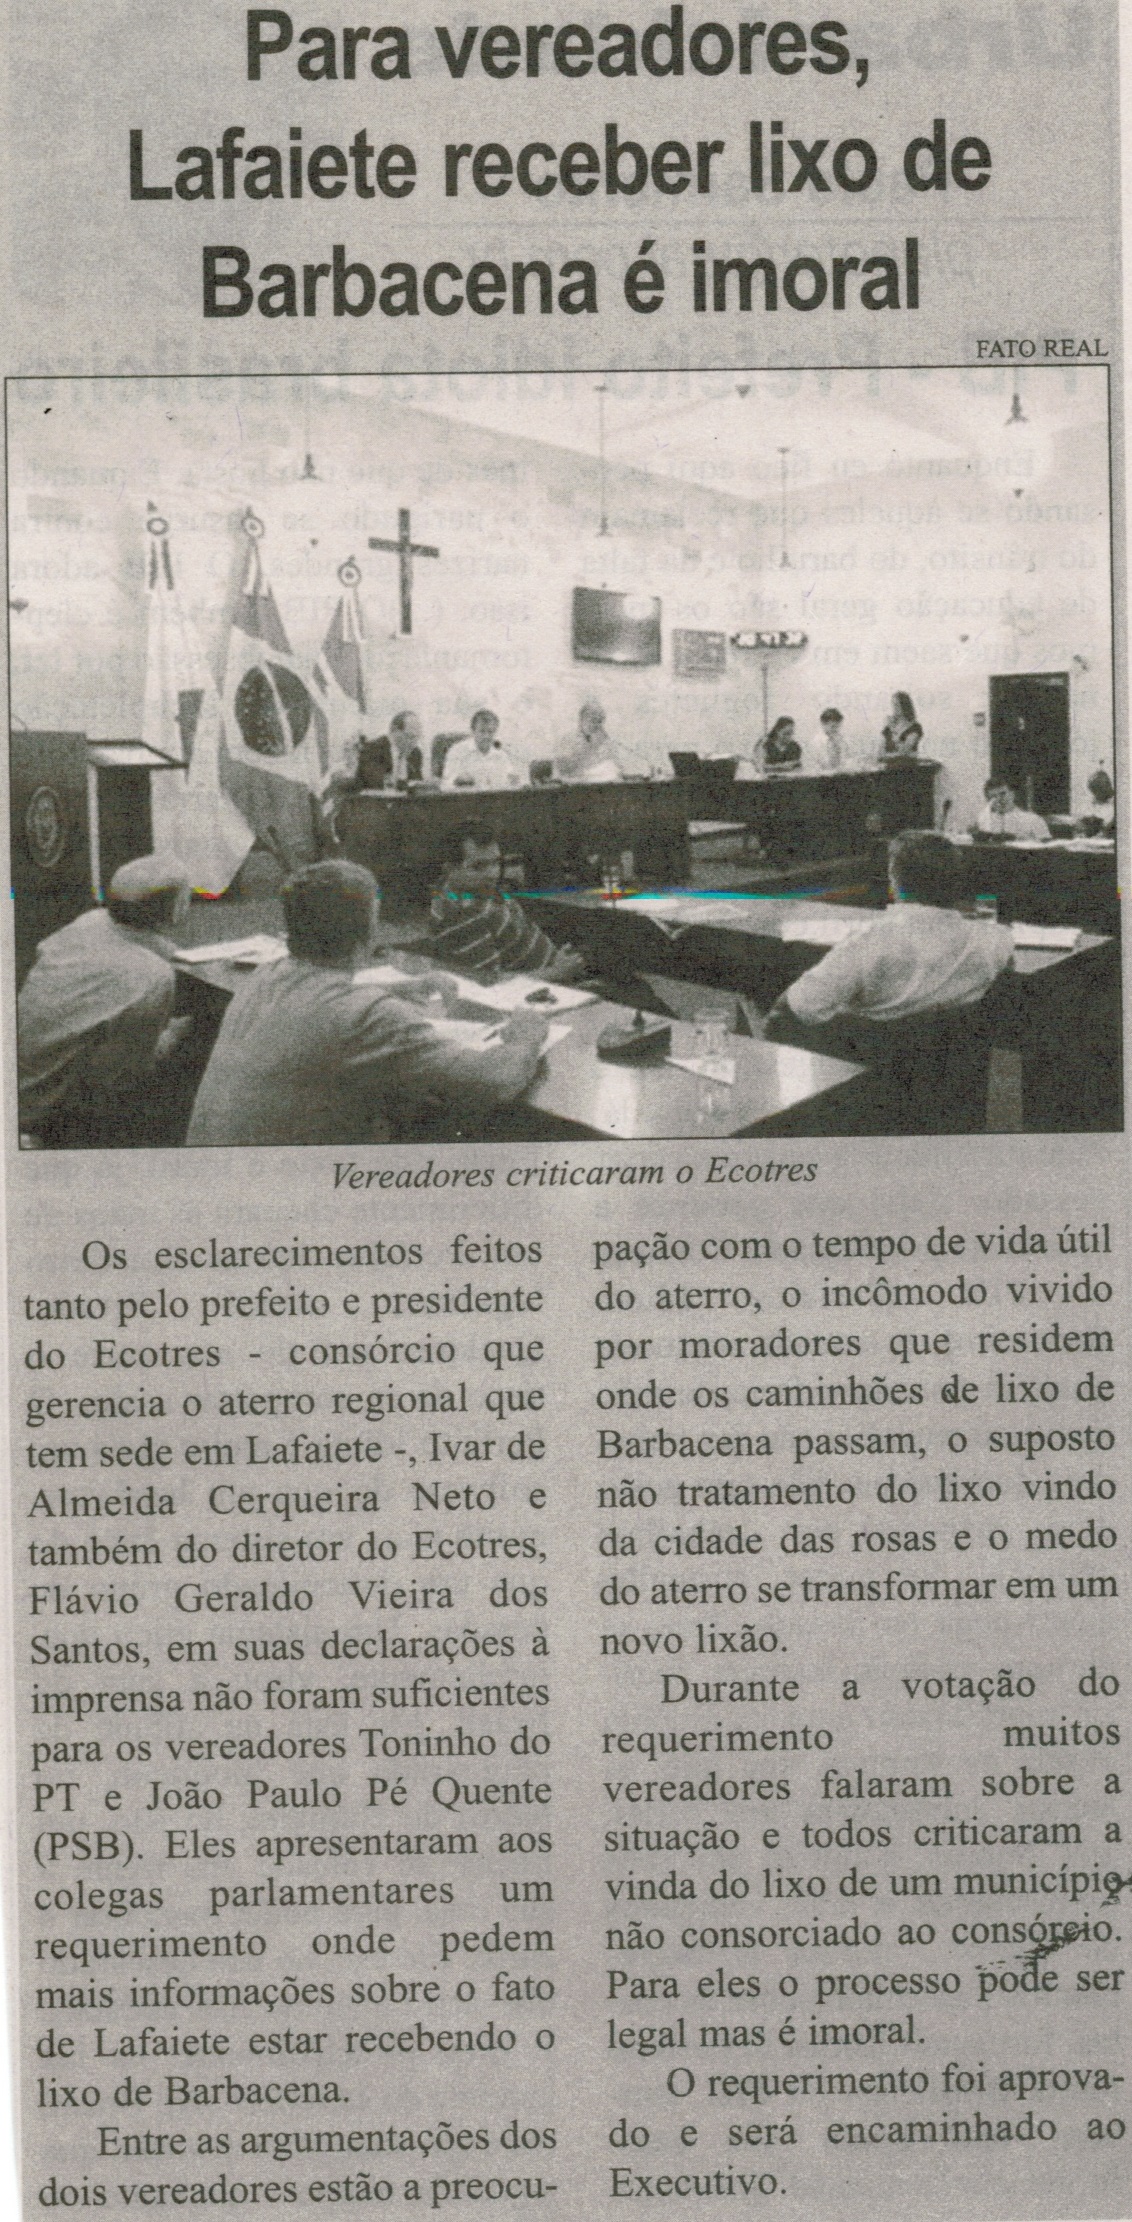  Para vereadores, Lafaiete receber lixo de Barbacena é imoral. Correio de Minas, Conselheiro Lafaiete, 29 dez. 2014, p. 5.